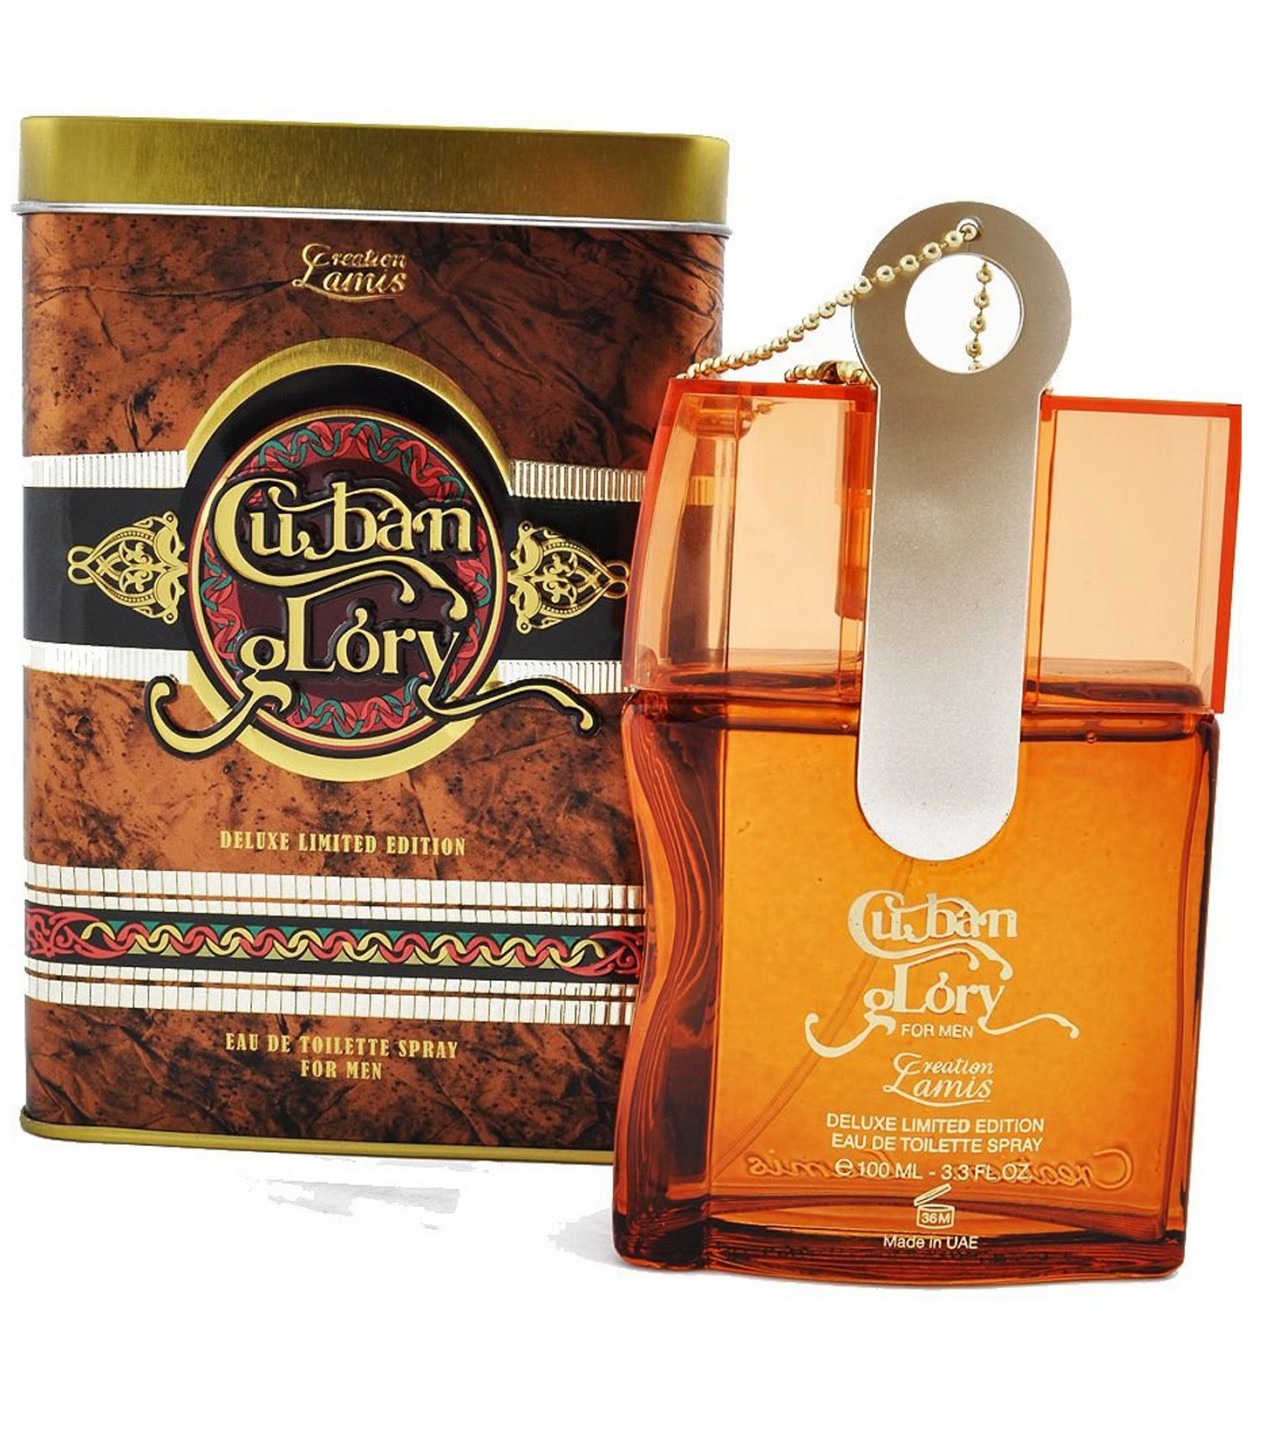 Creation Lamis Cuban Glory Perfume For Men - 100 ml